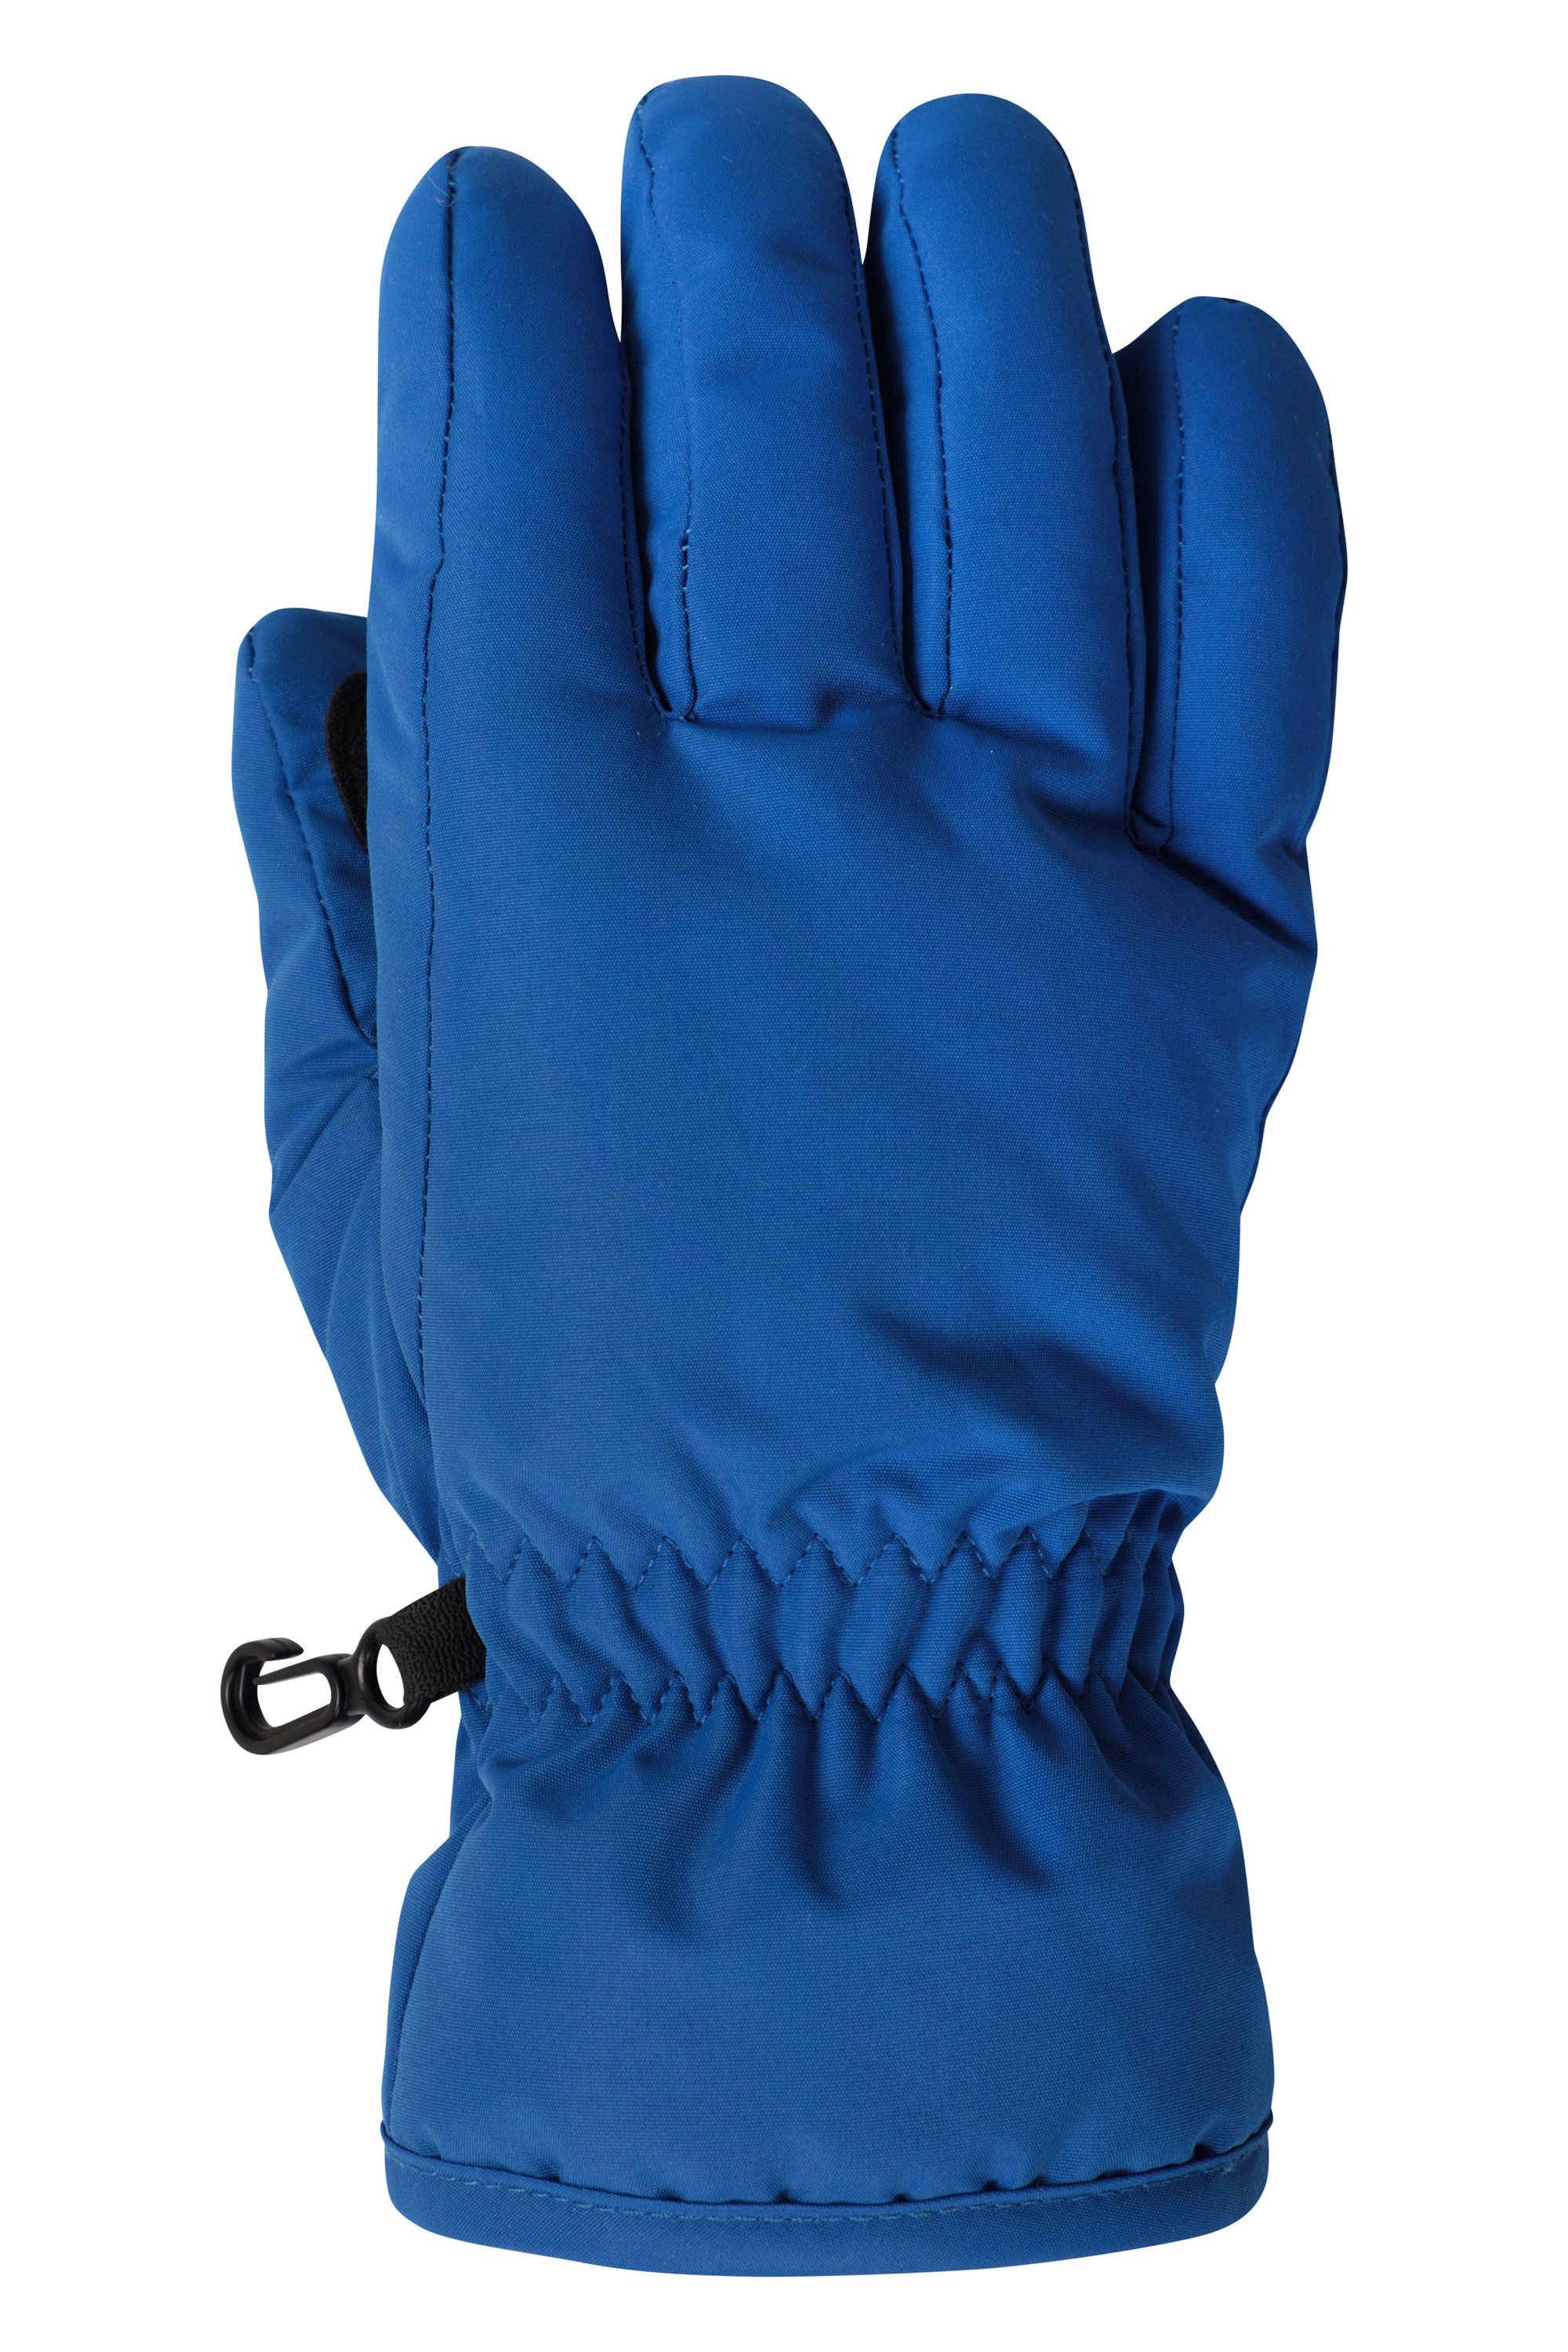 Famure Winter Gloves Waterproof-Touchscreen Compatible Ski Gloves